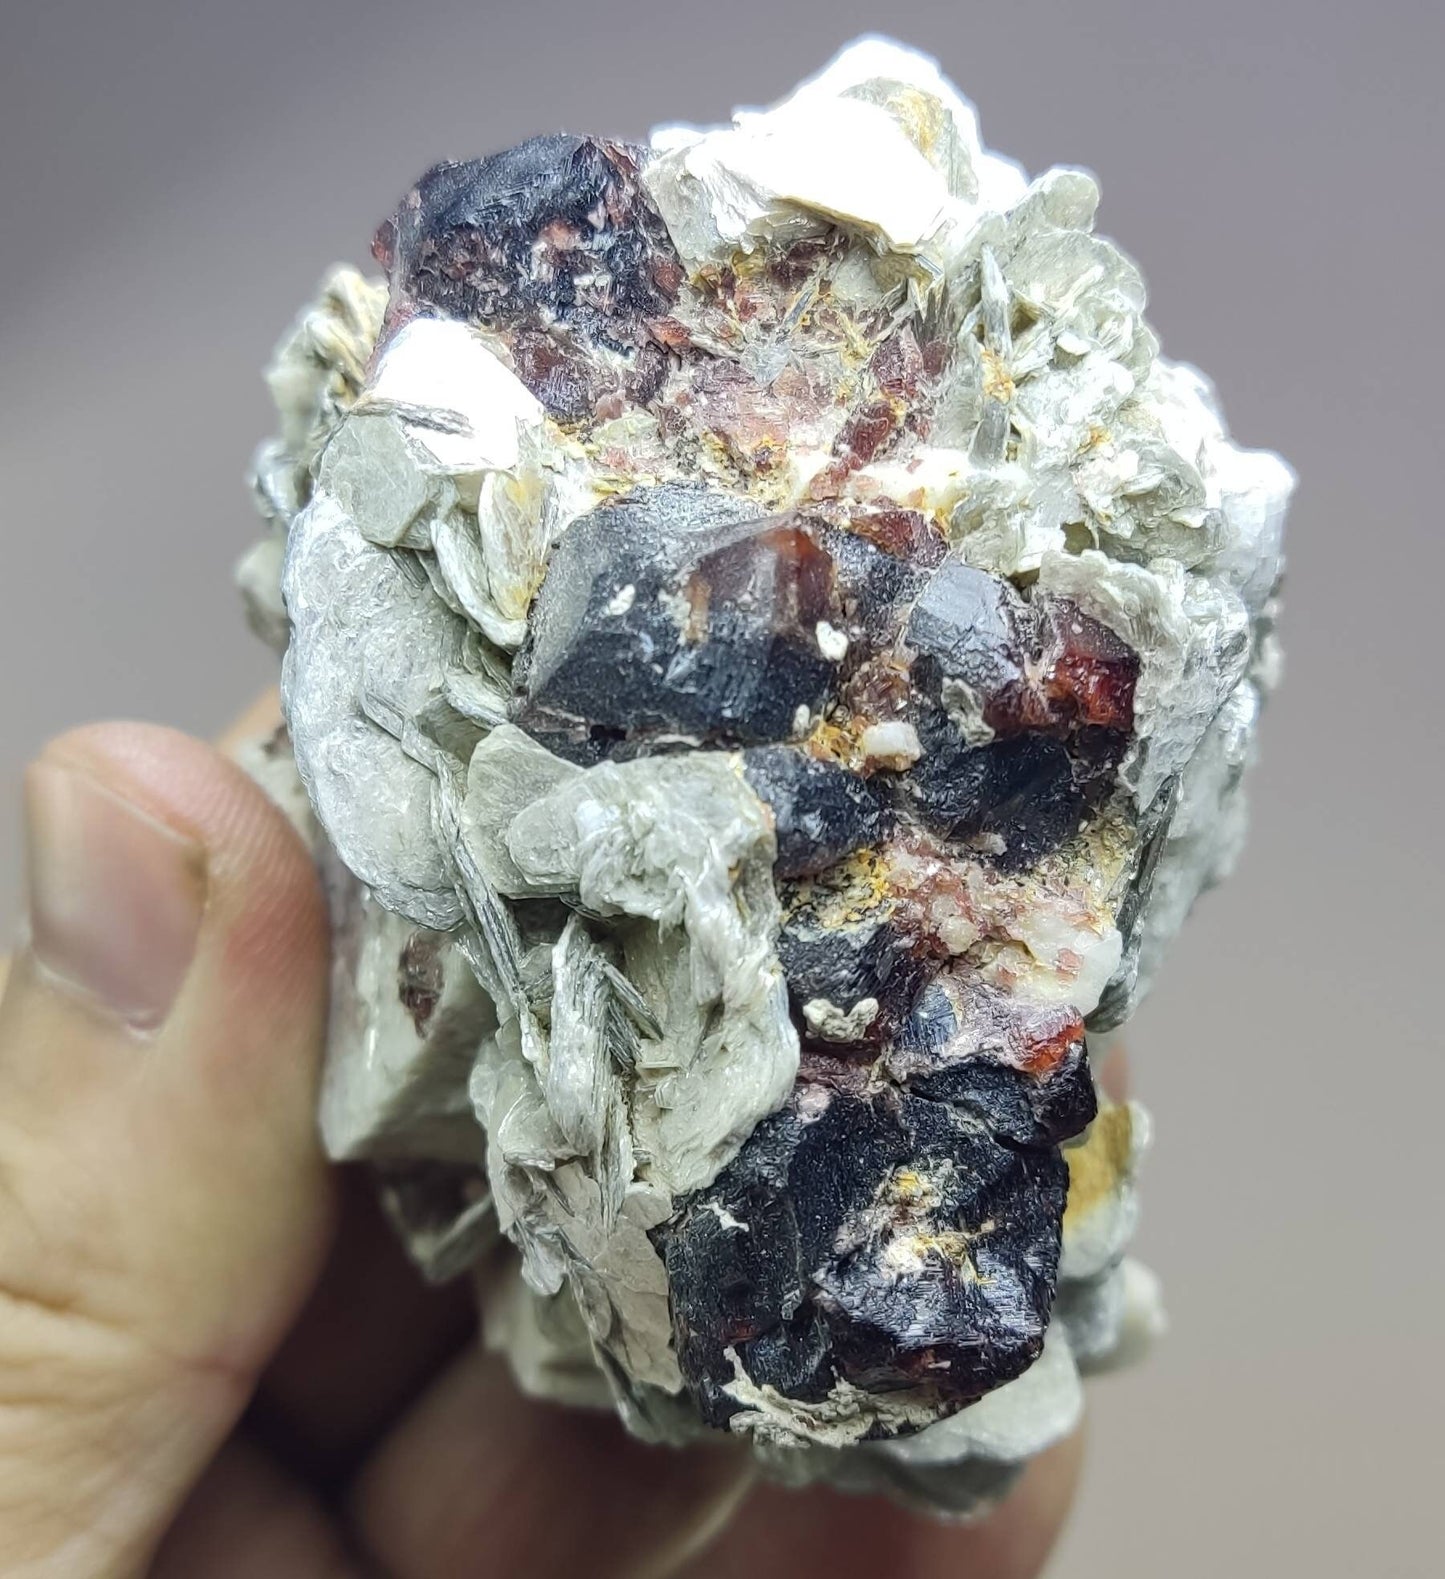 An amazing beautiful specimen of spessartine Garnet crystals on matrix with mica 300 grams